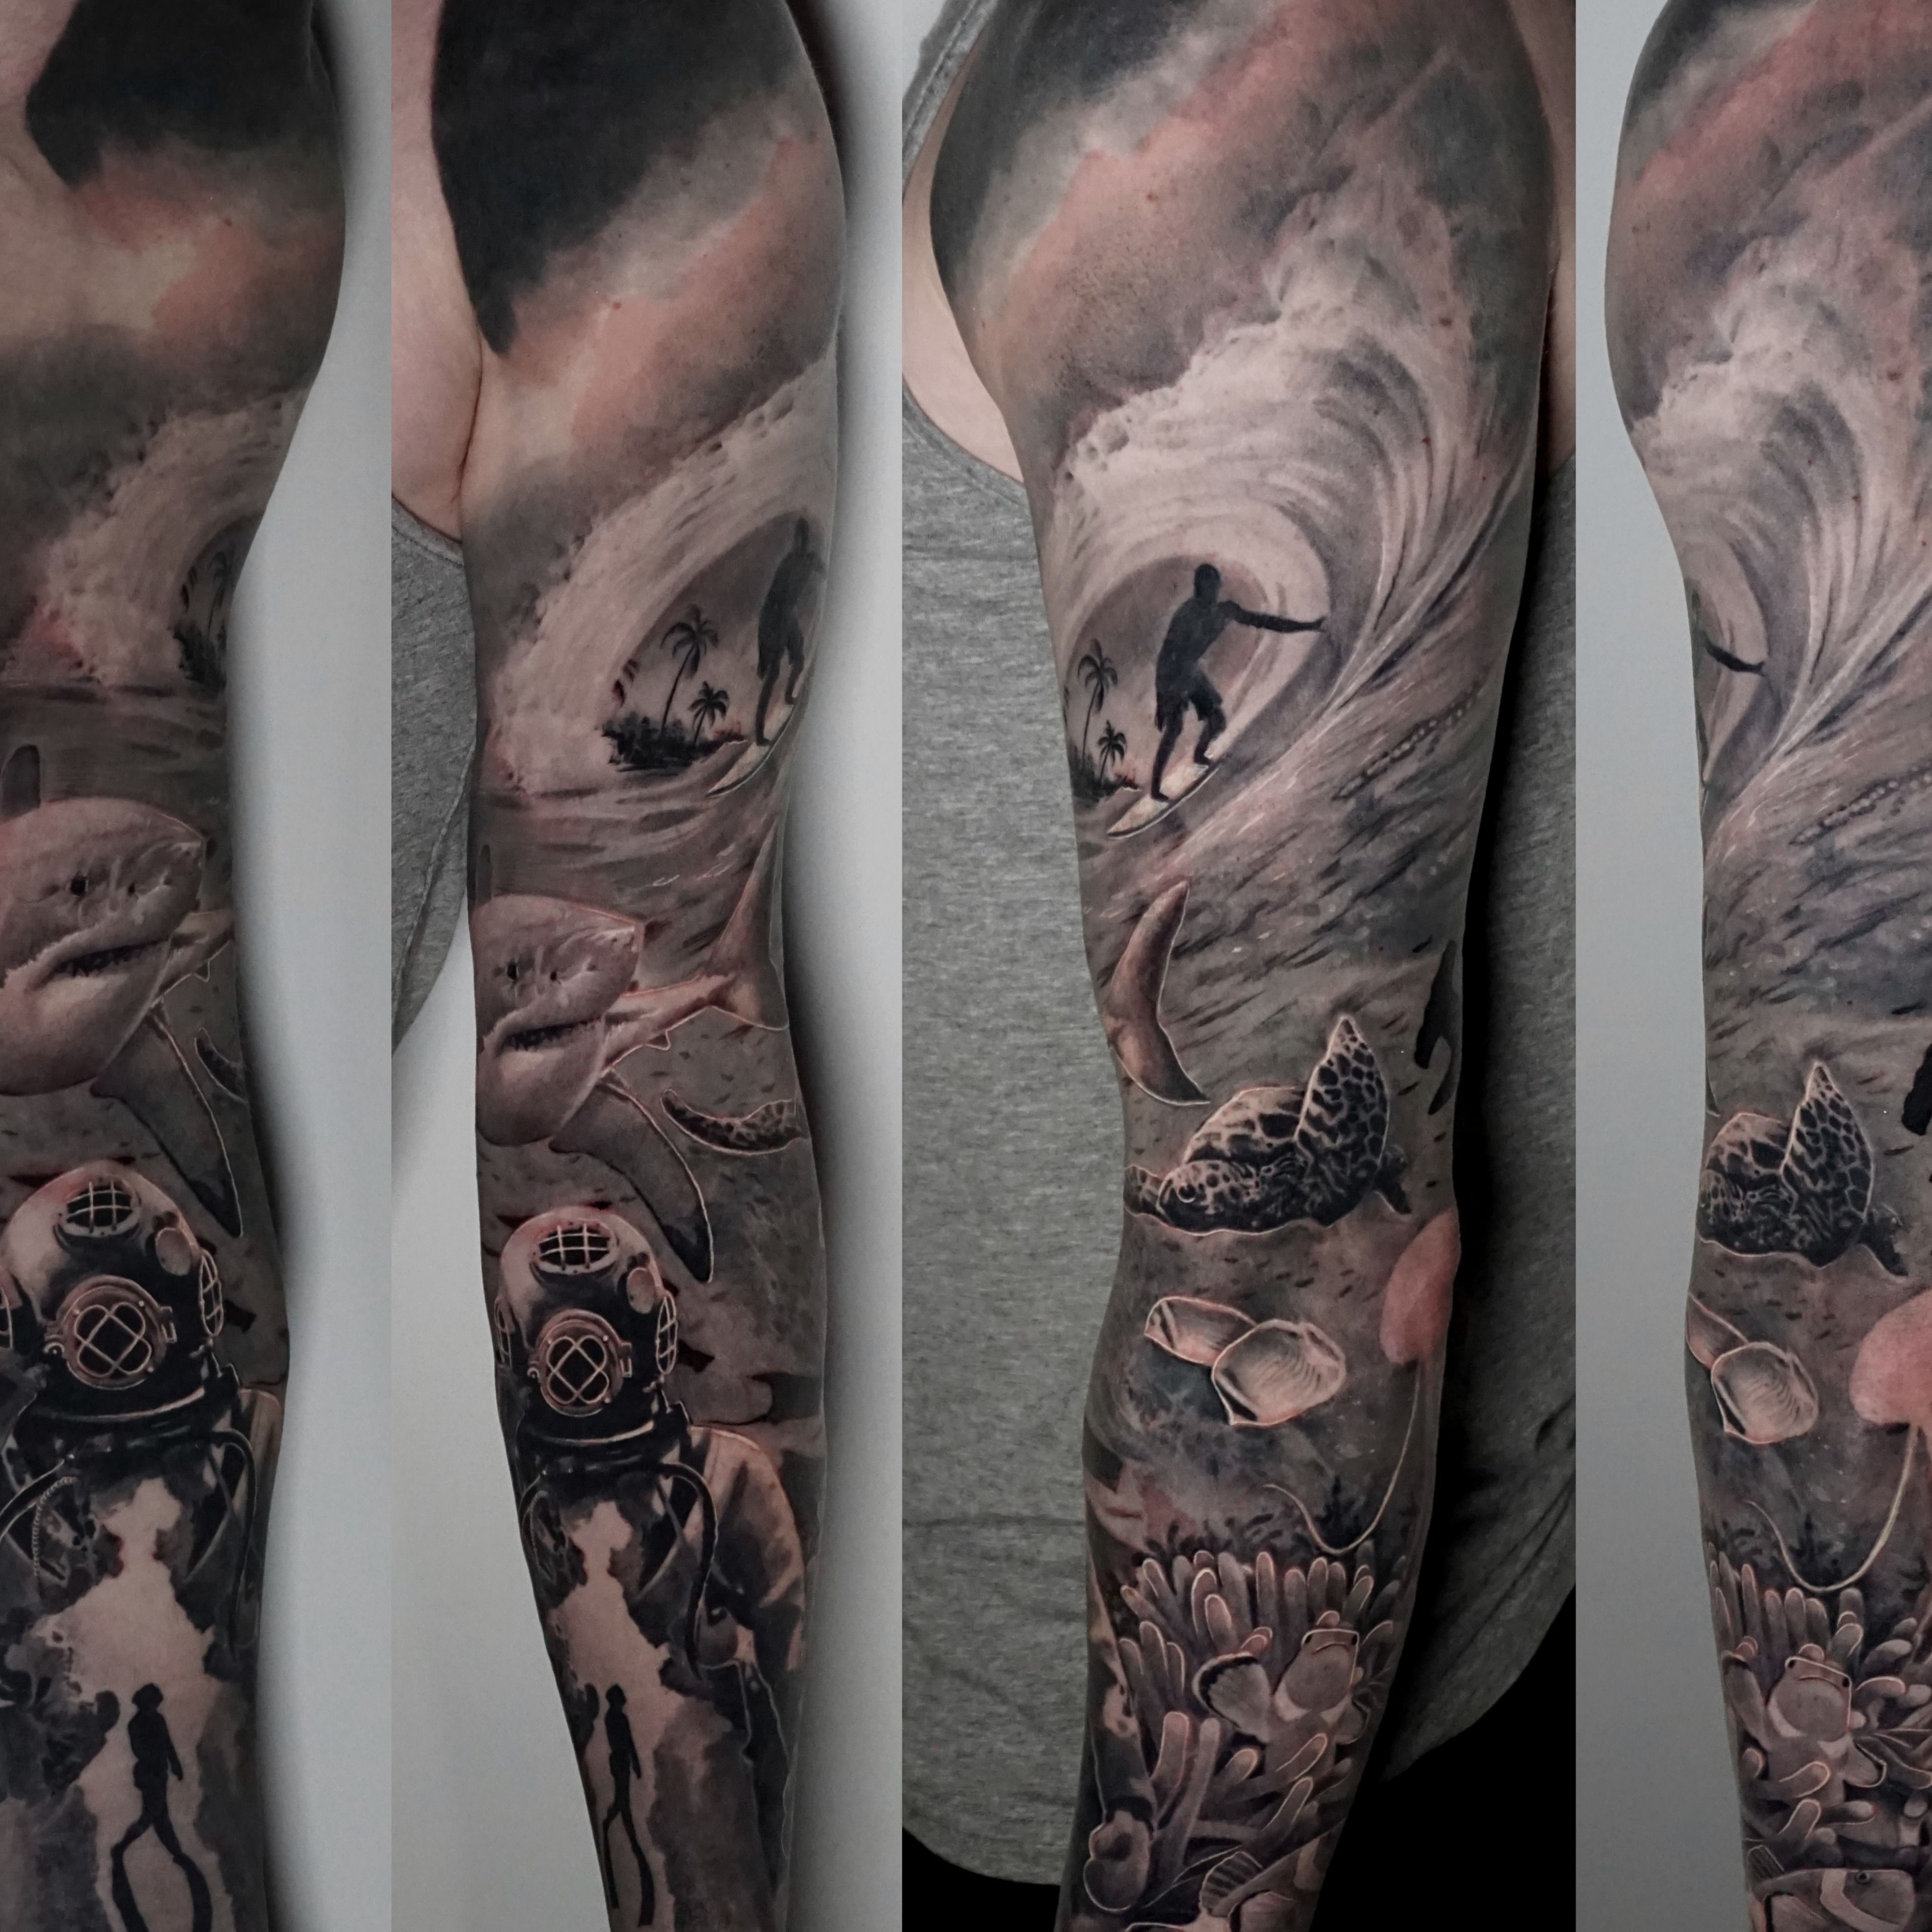 50 Coral Reef Tattoo Designs For Men  Aquatic Ink Mastery  Tattoo designs  men Ocean sleeve tattoos Underwater tattoo